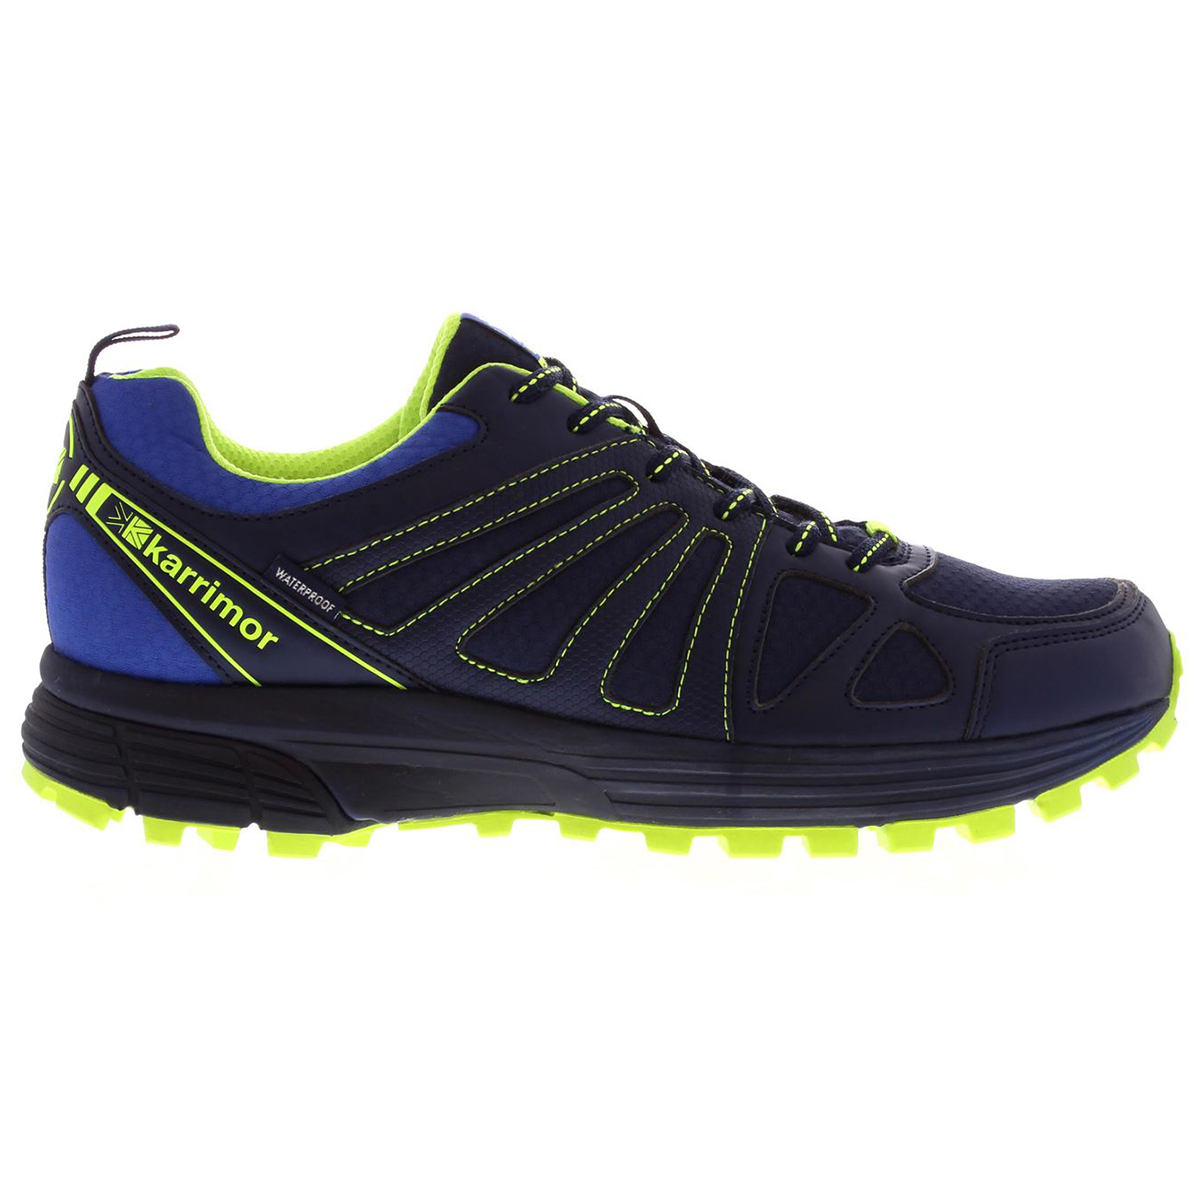 Karrimor Men's Caracal Waterproof Trail Running Shoes - Blue, 10.5